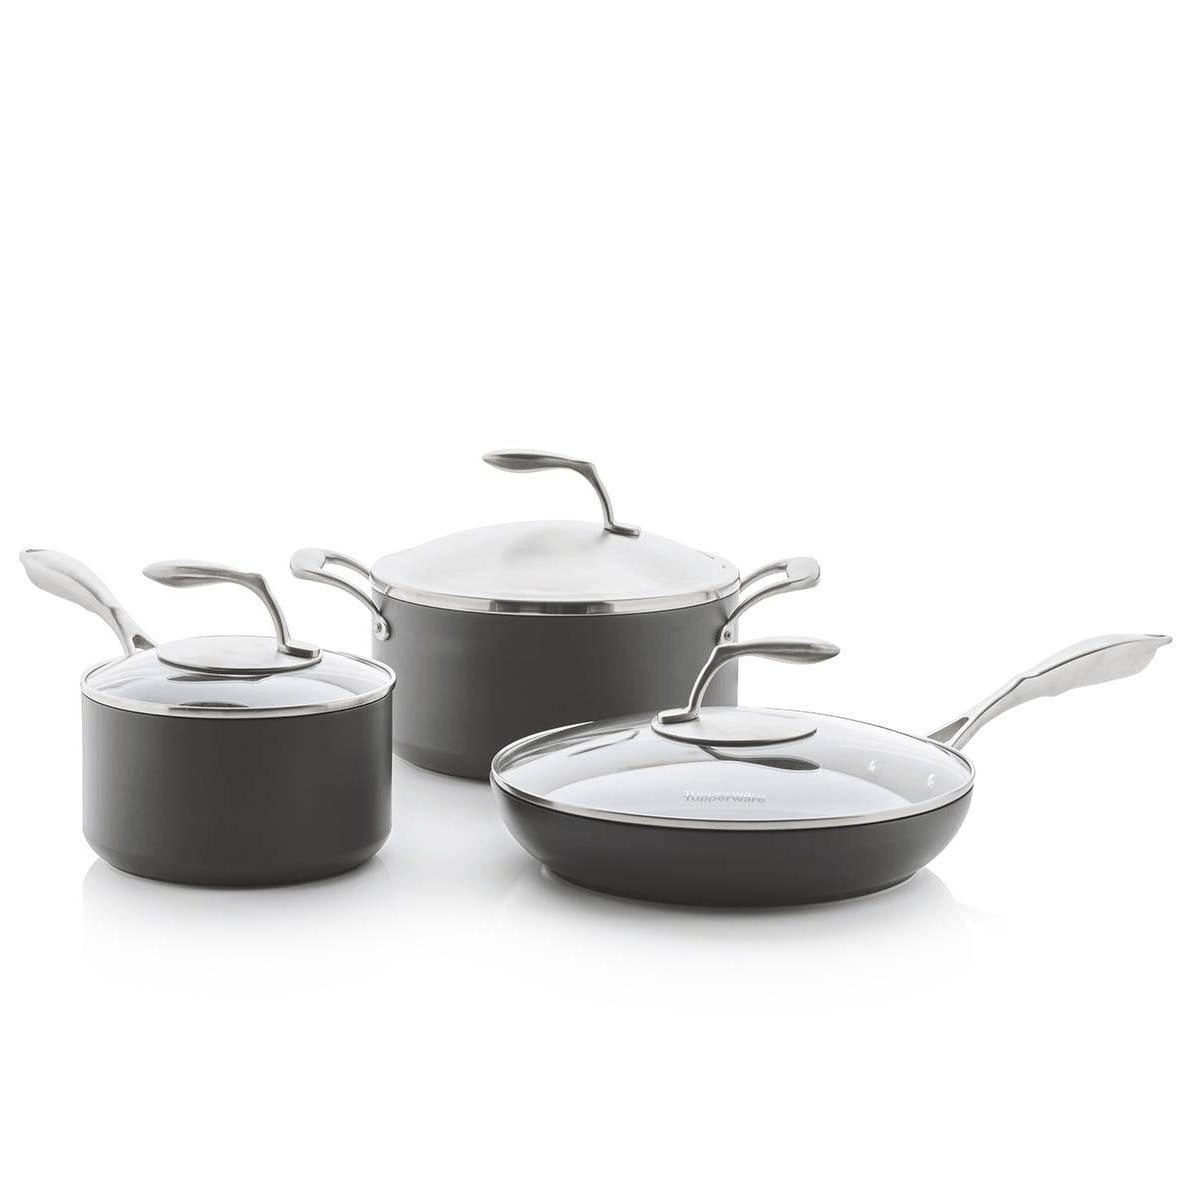 Essentials Nonstick Cookware Set, 2 piece Fry & Sauce Pan with lid